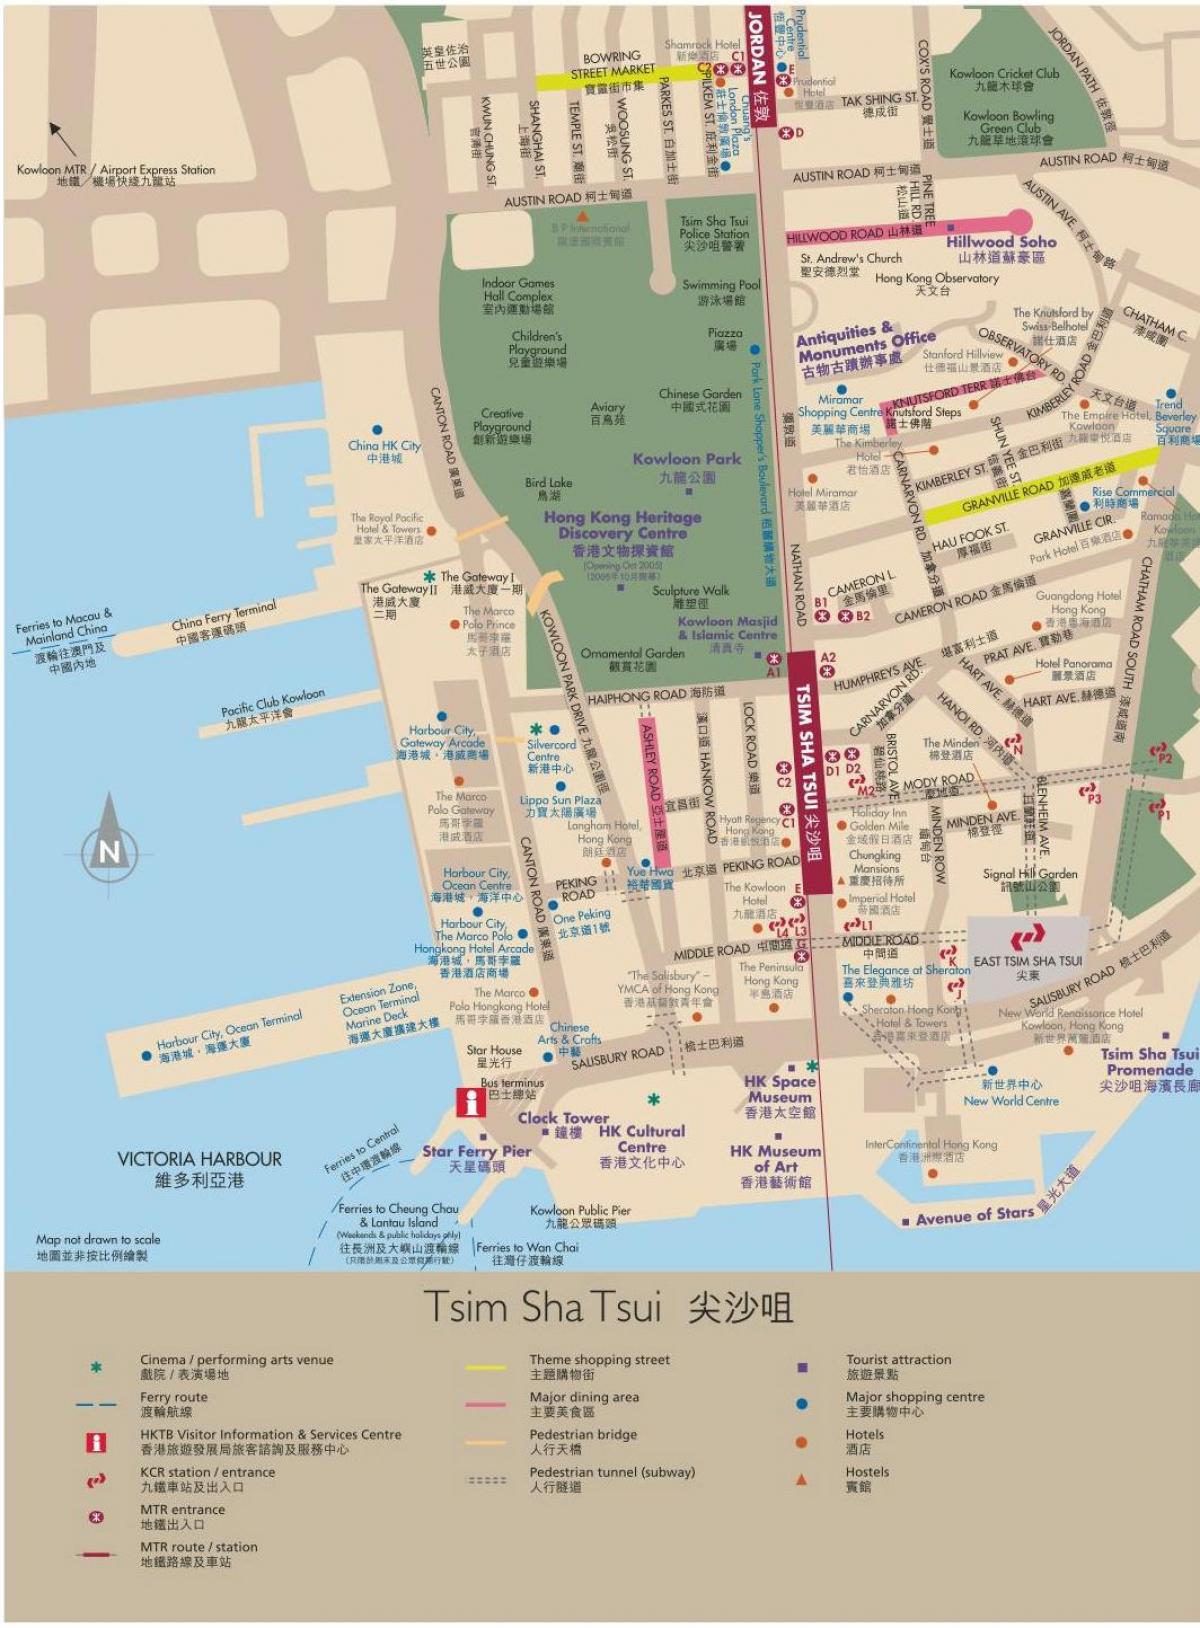 Hong Kong hartë Kowloon